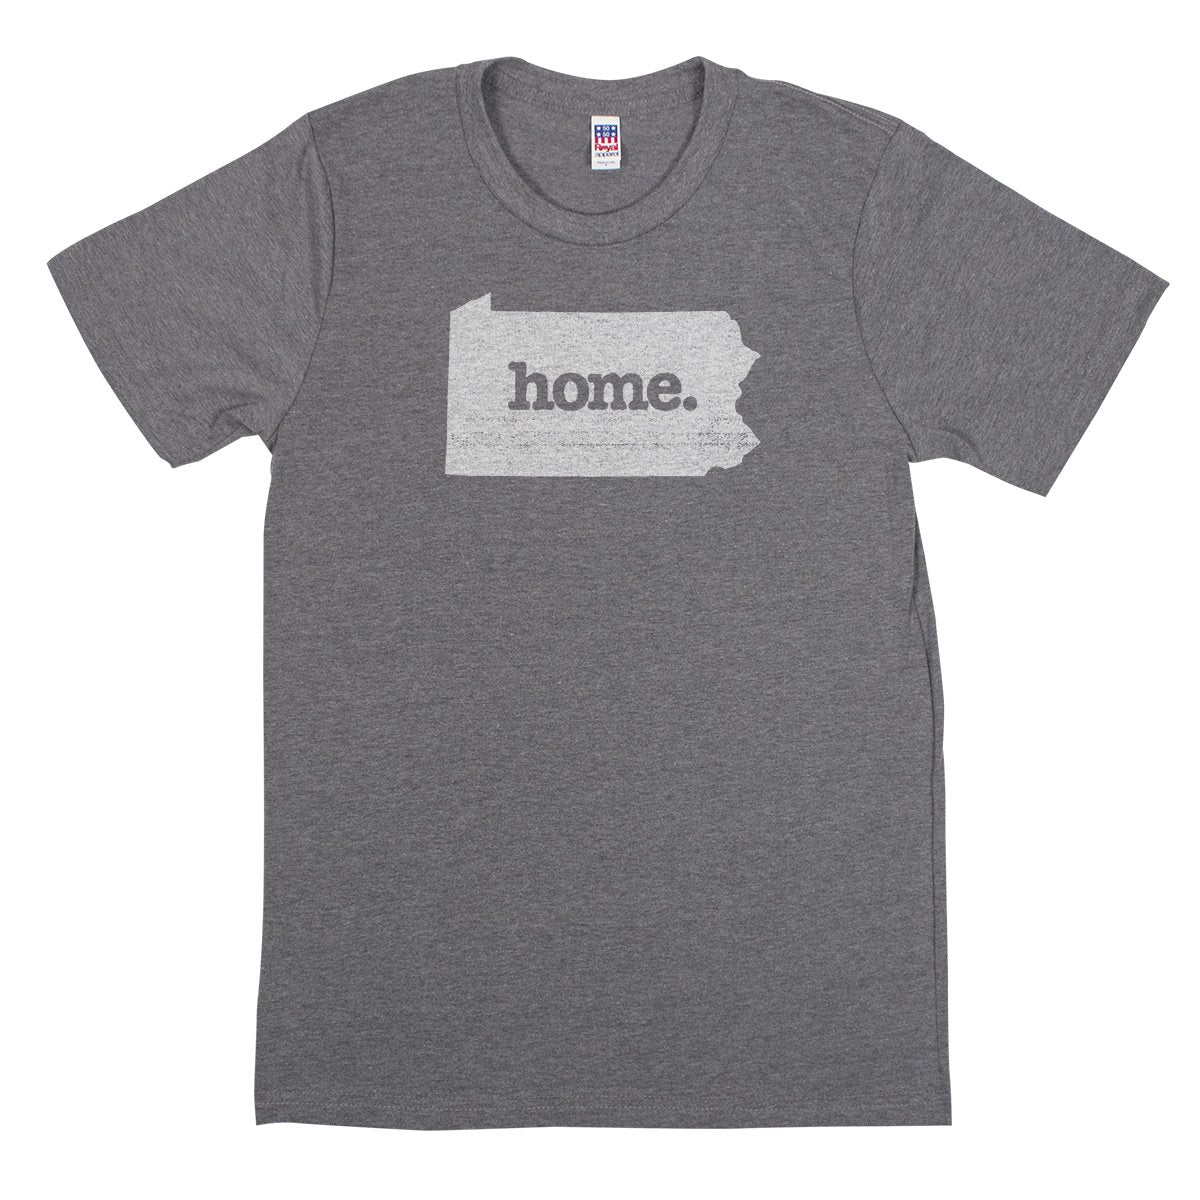 home. Men’s Unisex T-Shirt - North Carolina - CLEARANCE